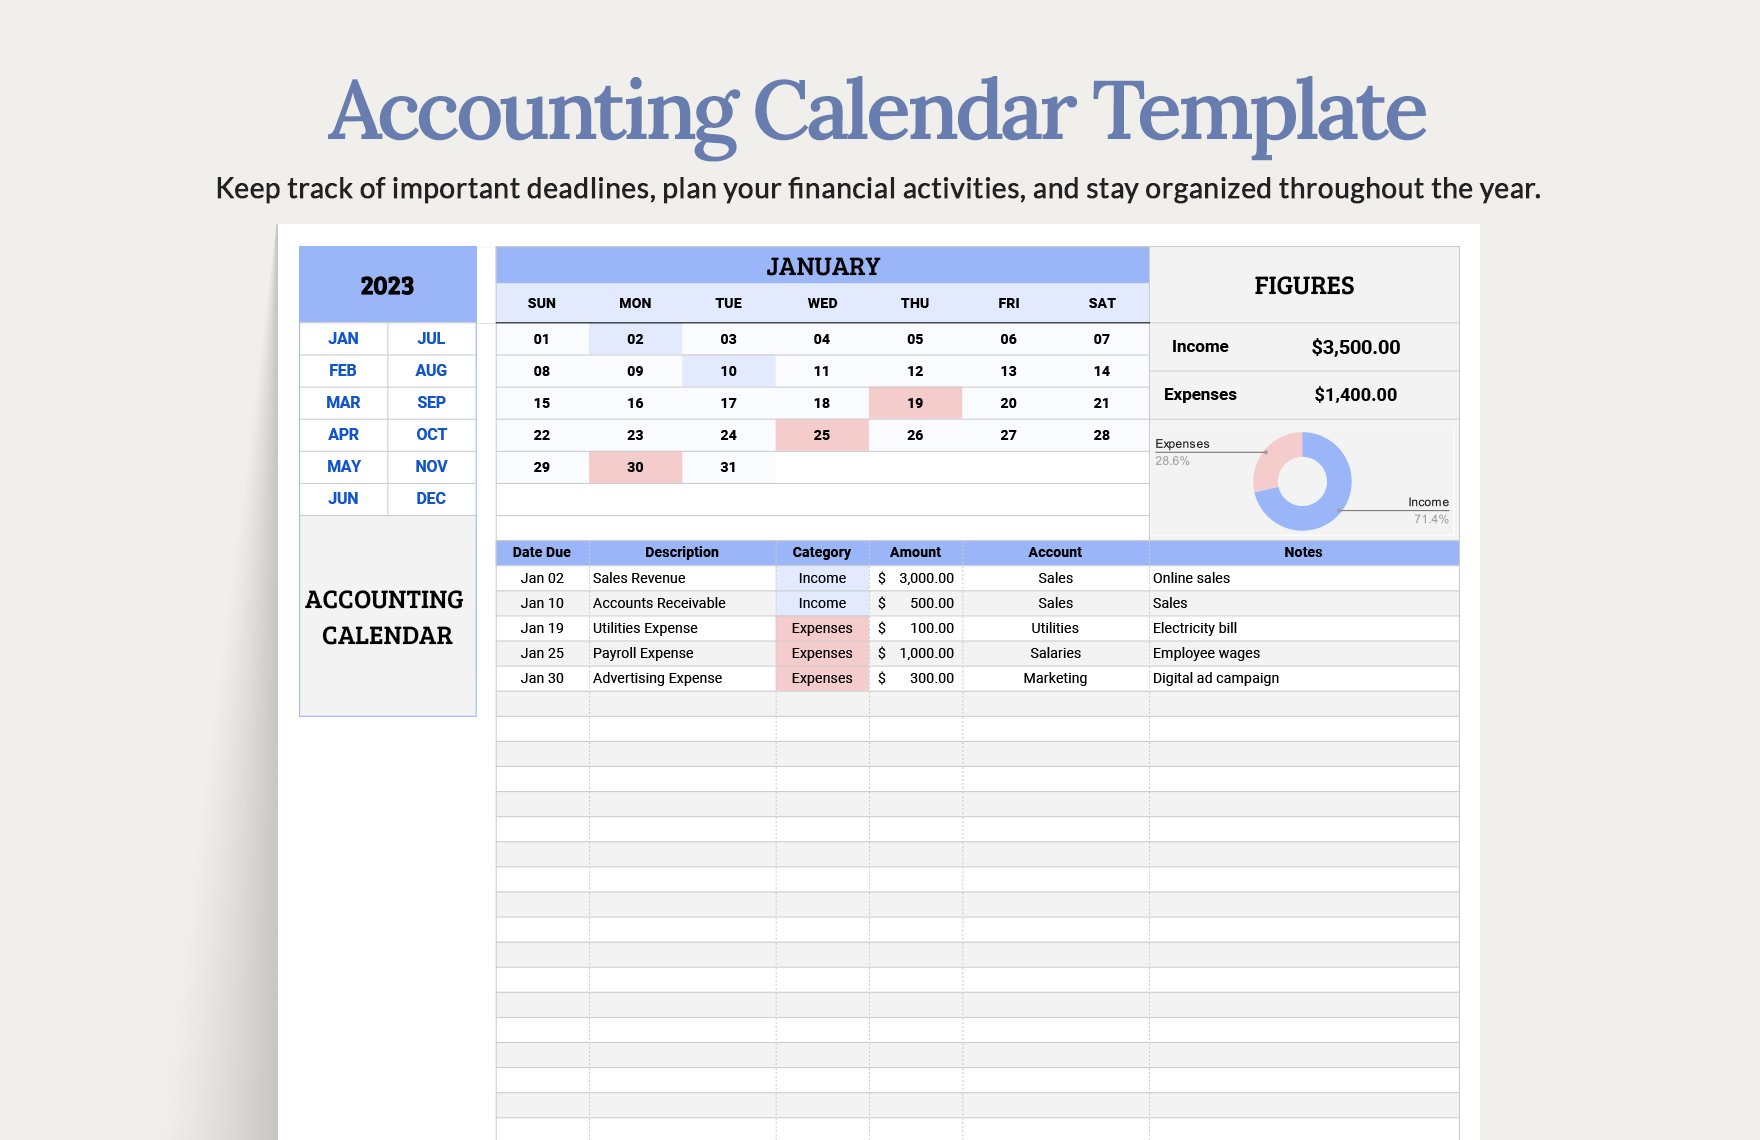 accounting principles 9th edition templates